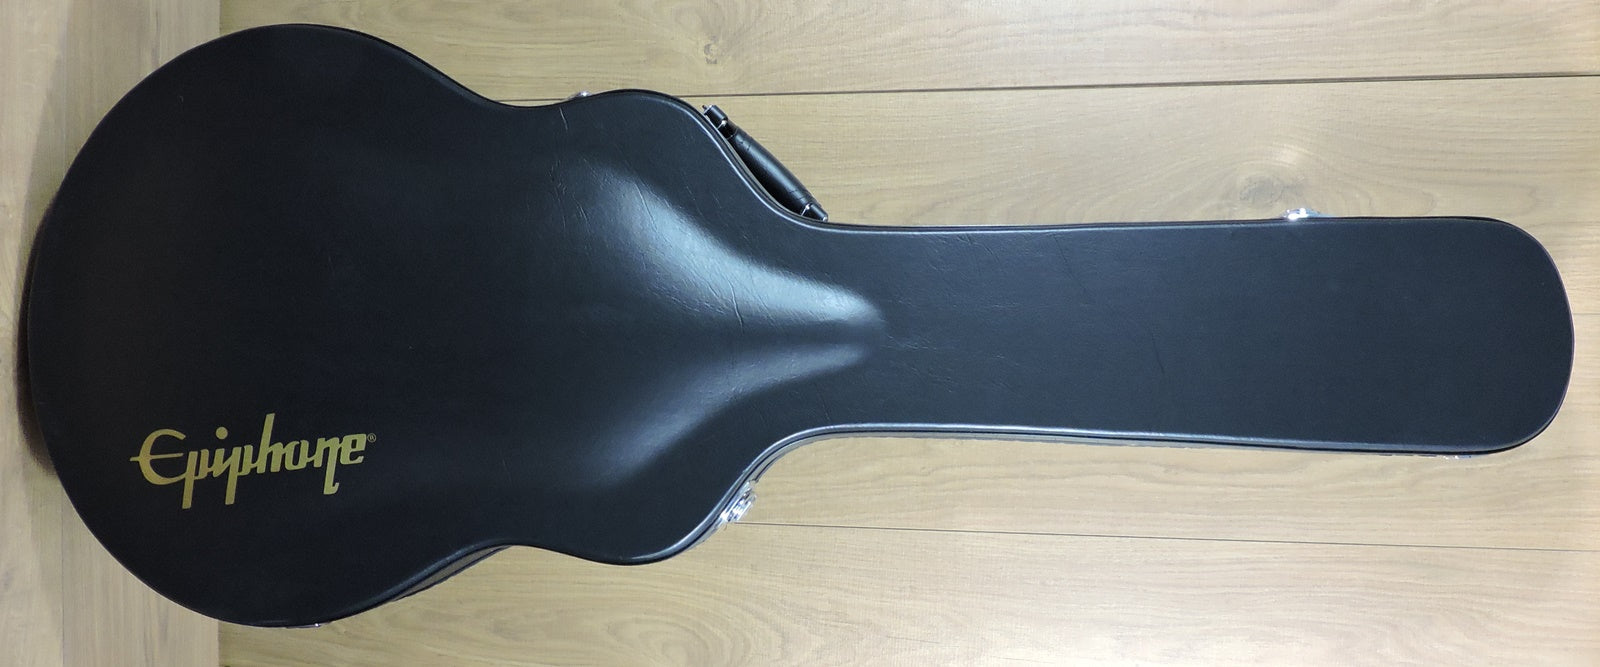 Epiphone Hard Case For ES-355 Semi Hollow Guitars - Used